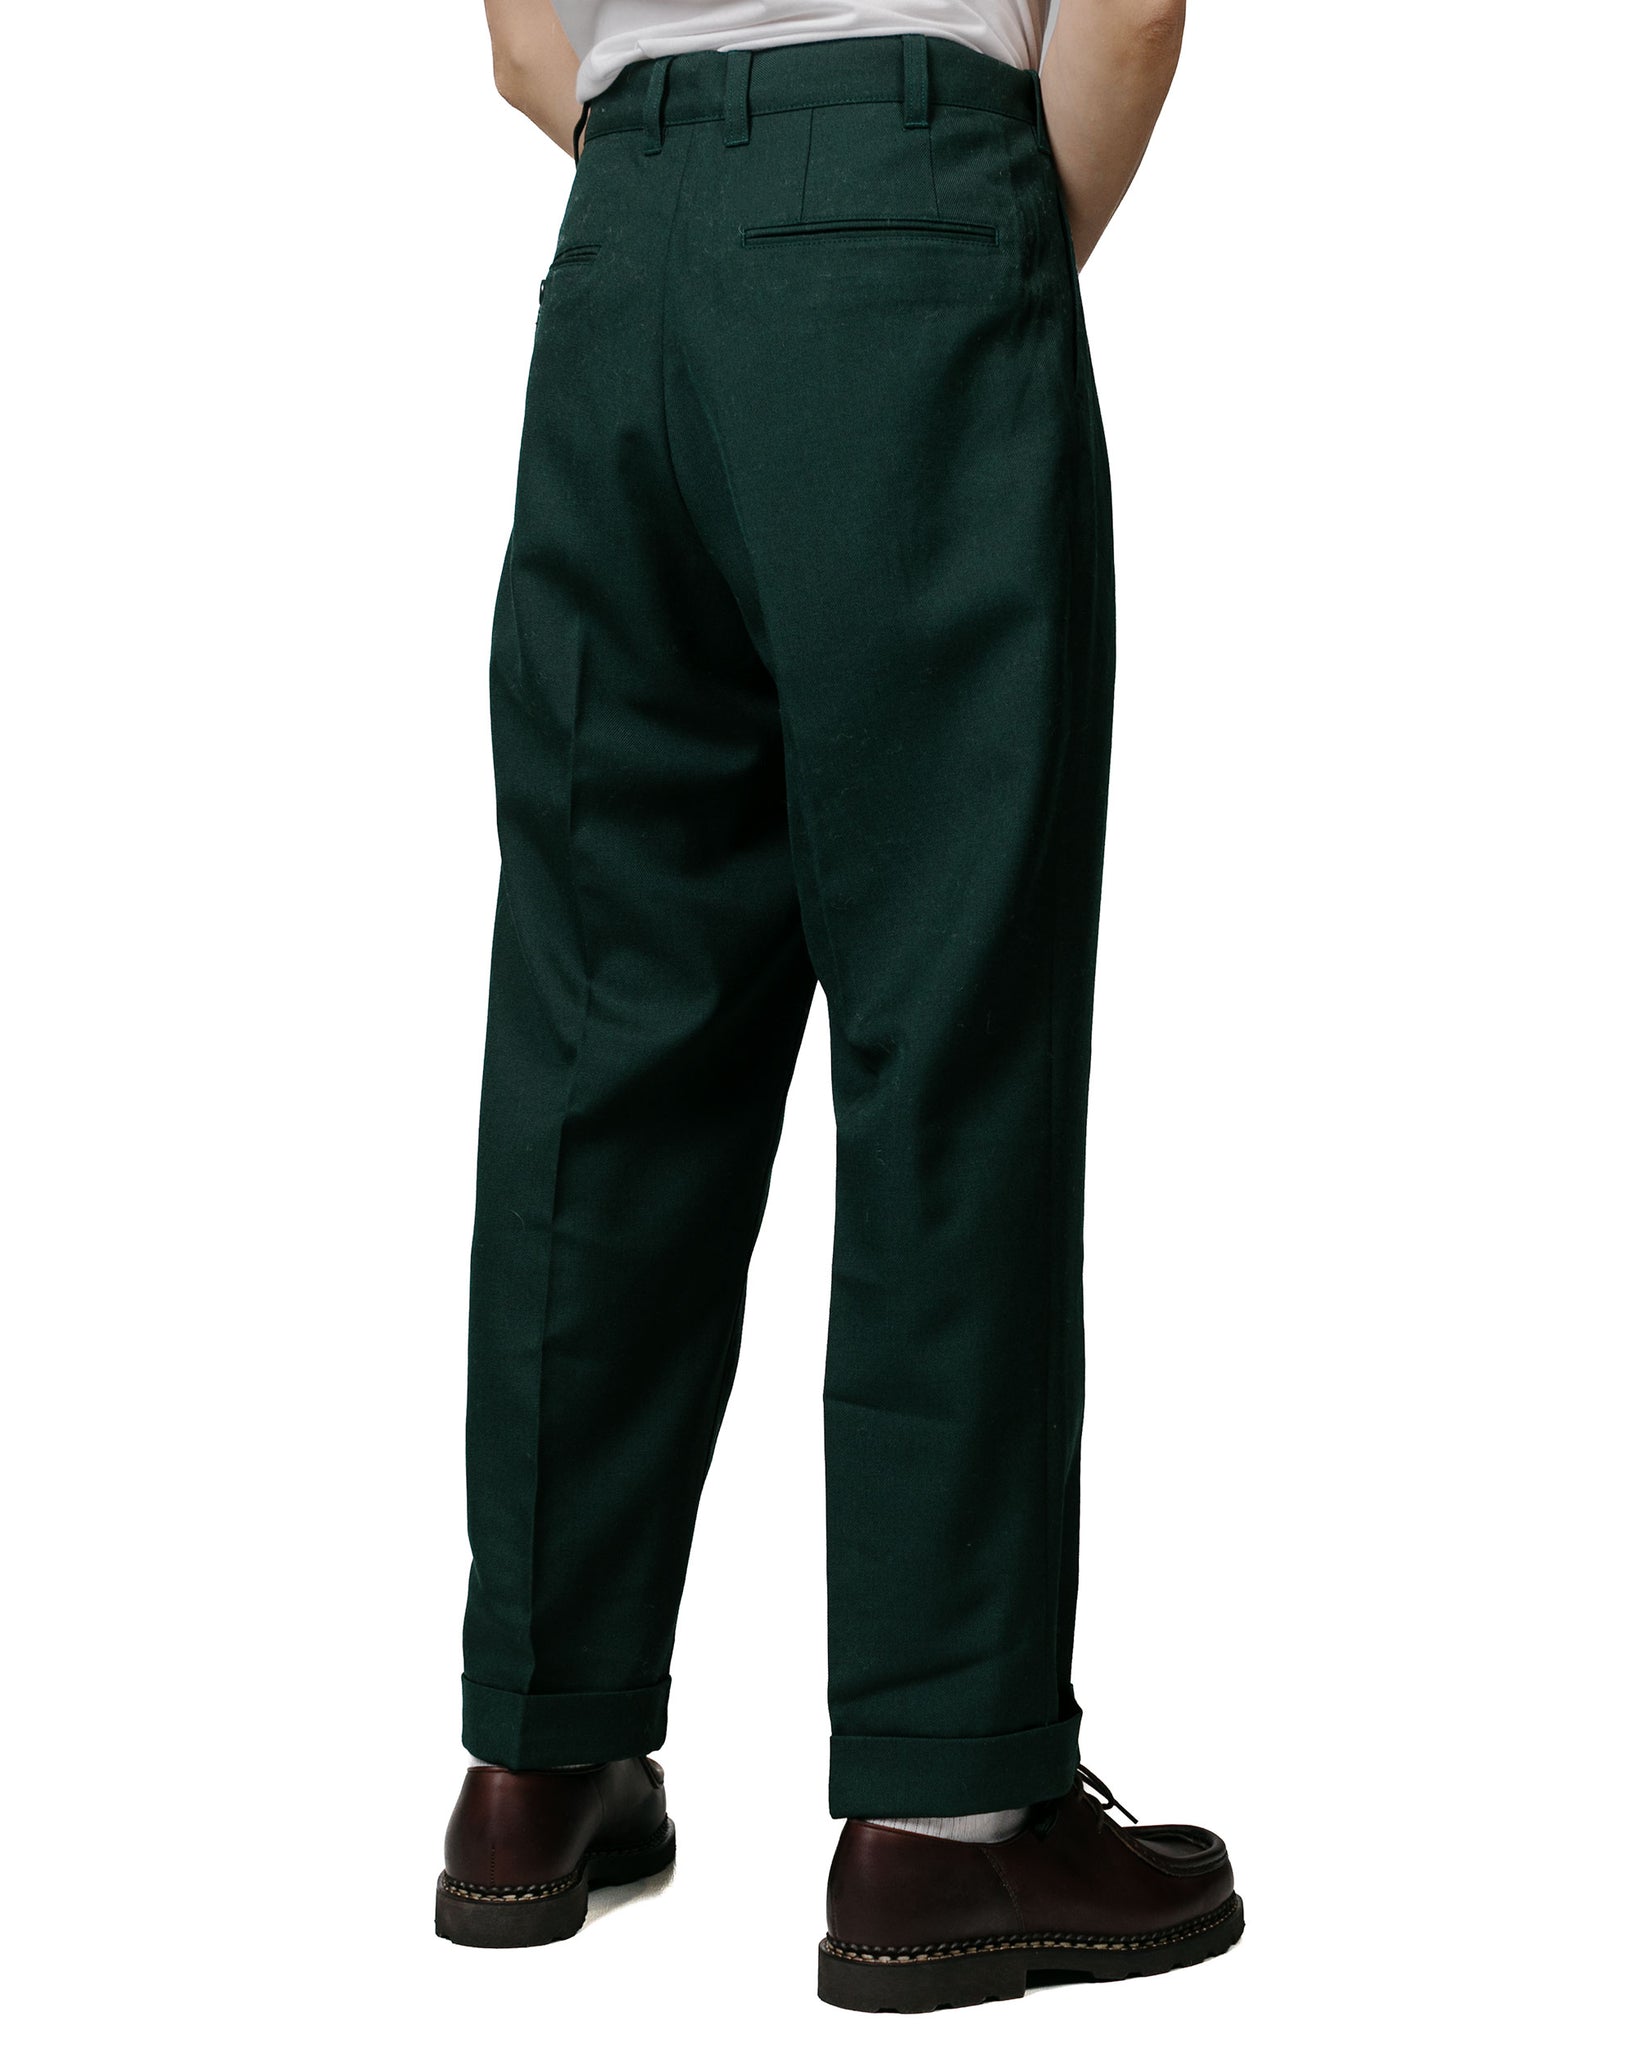 Beams Plus 2Pleats Uniform Serge Green model back